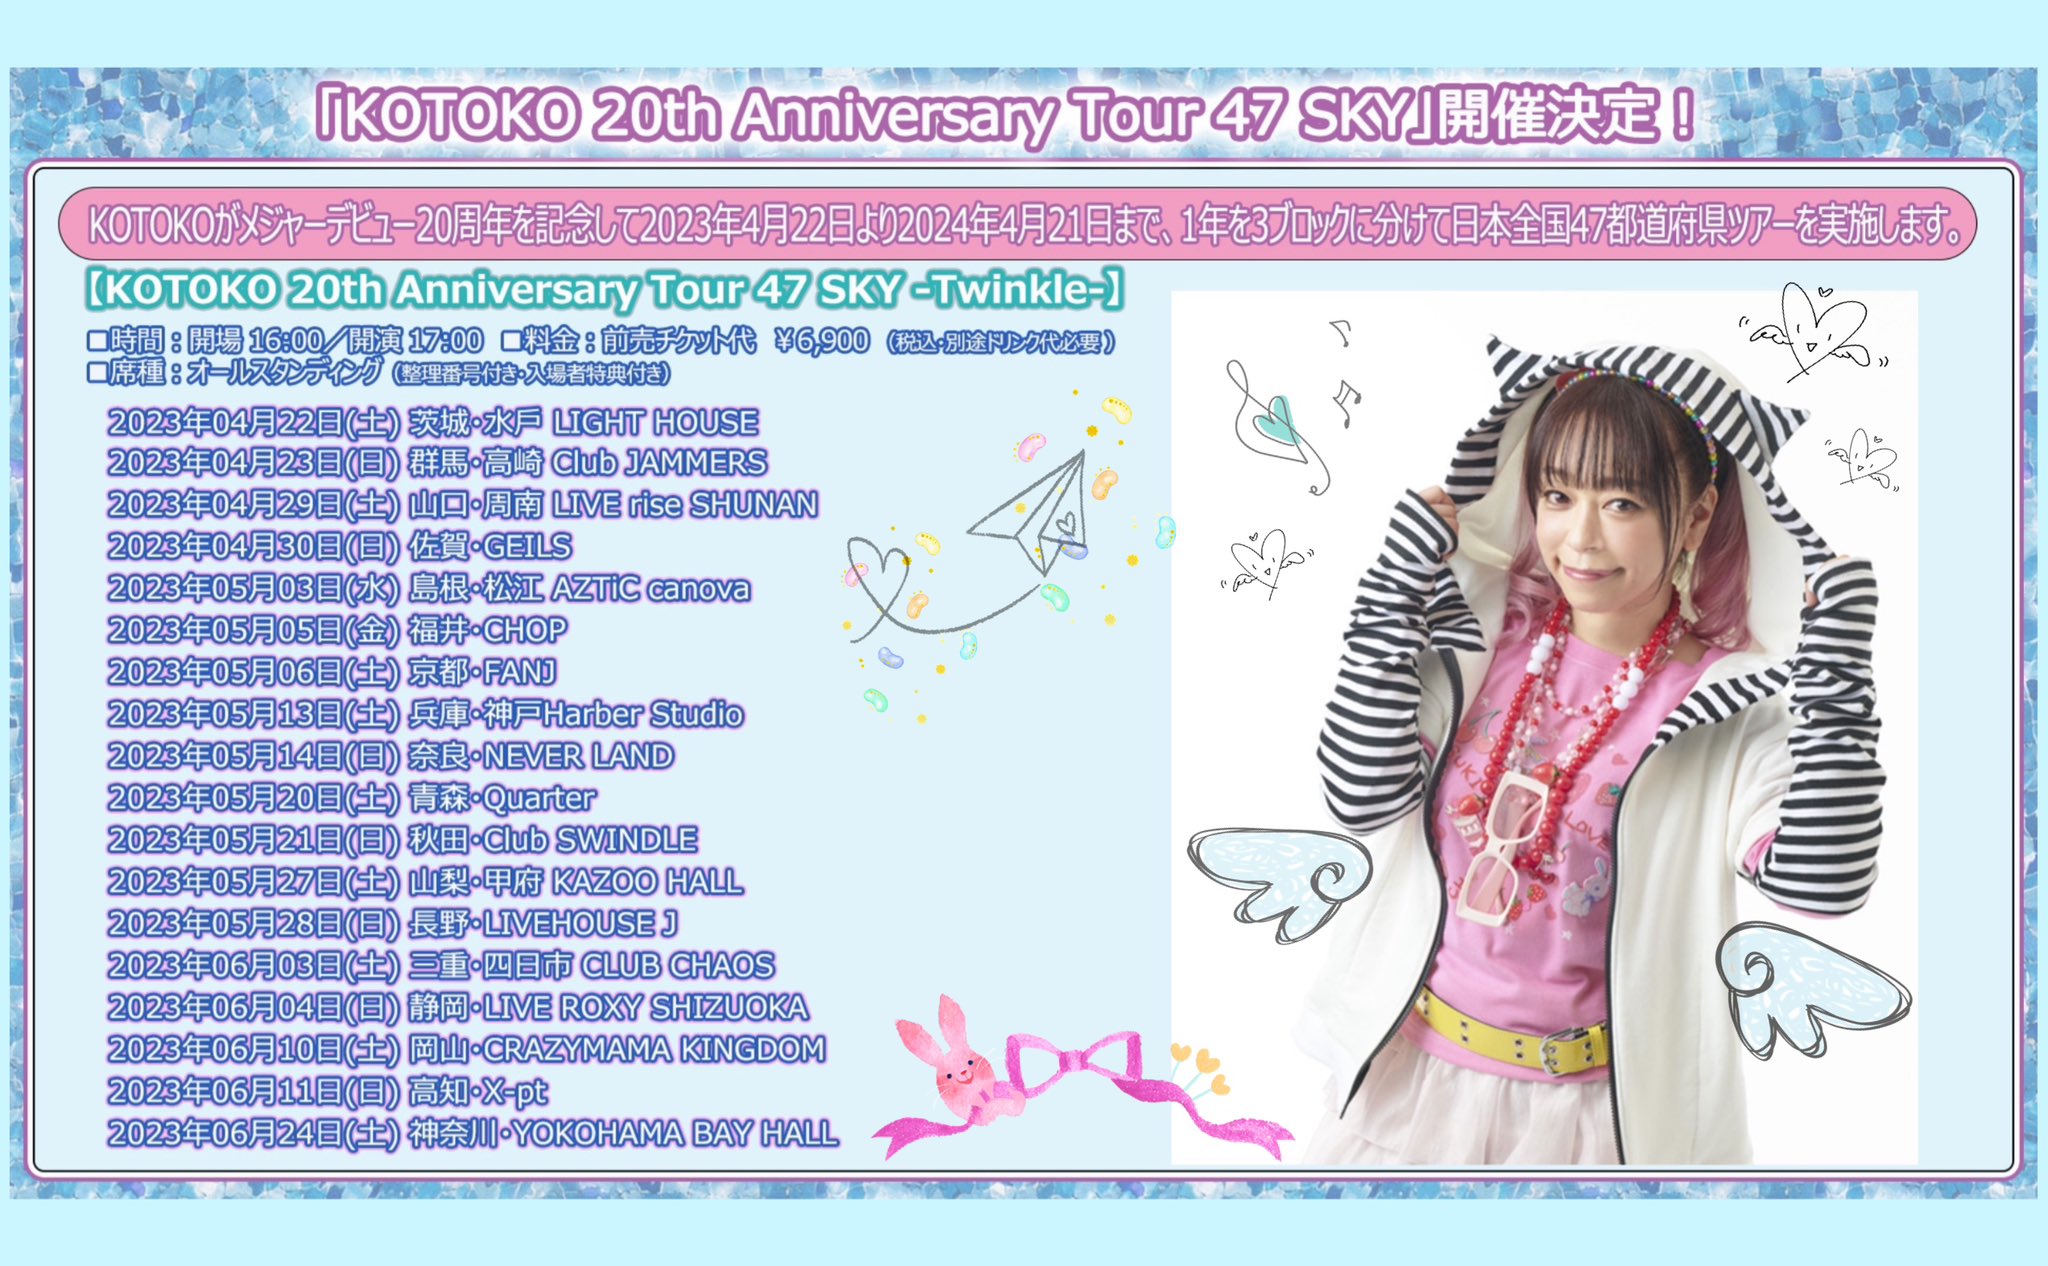 KOTOKO 20th Anniversary Tour 47 SKY -Twinkle-